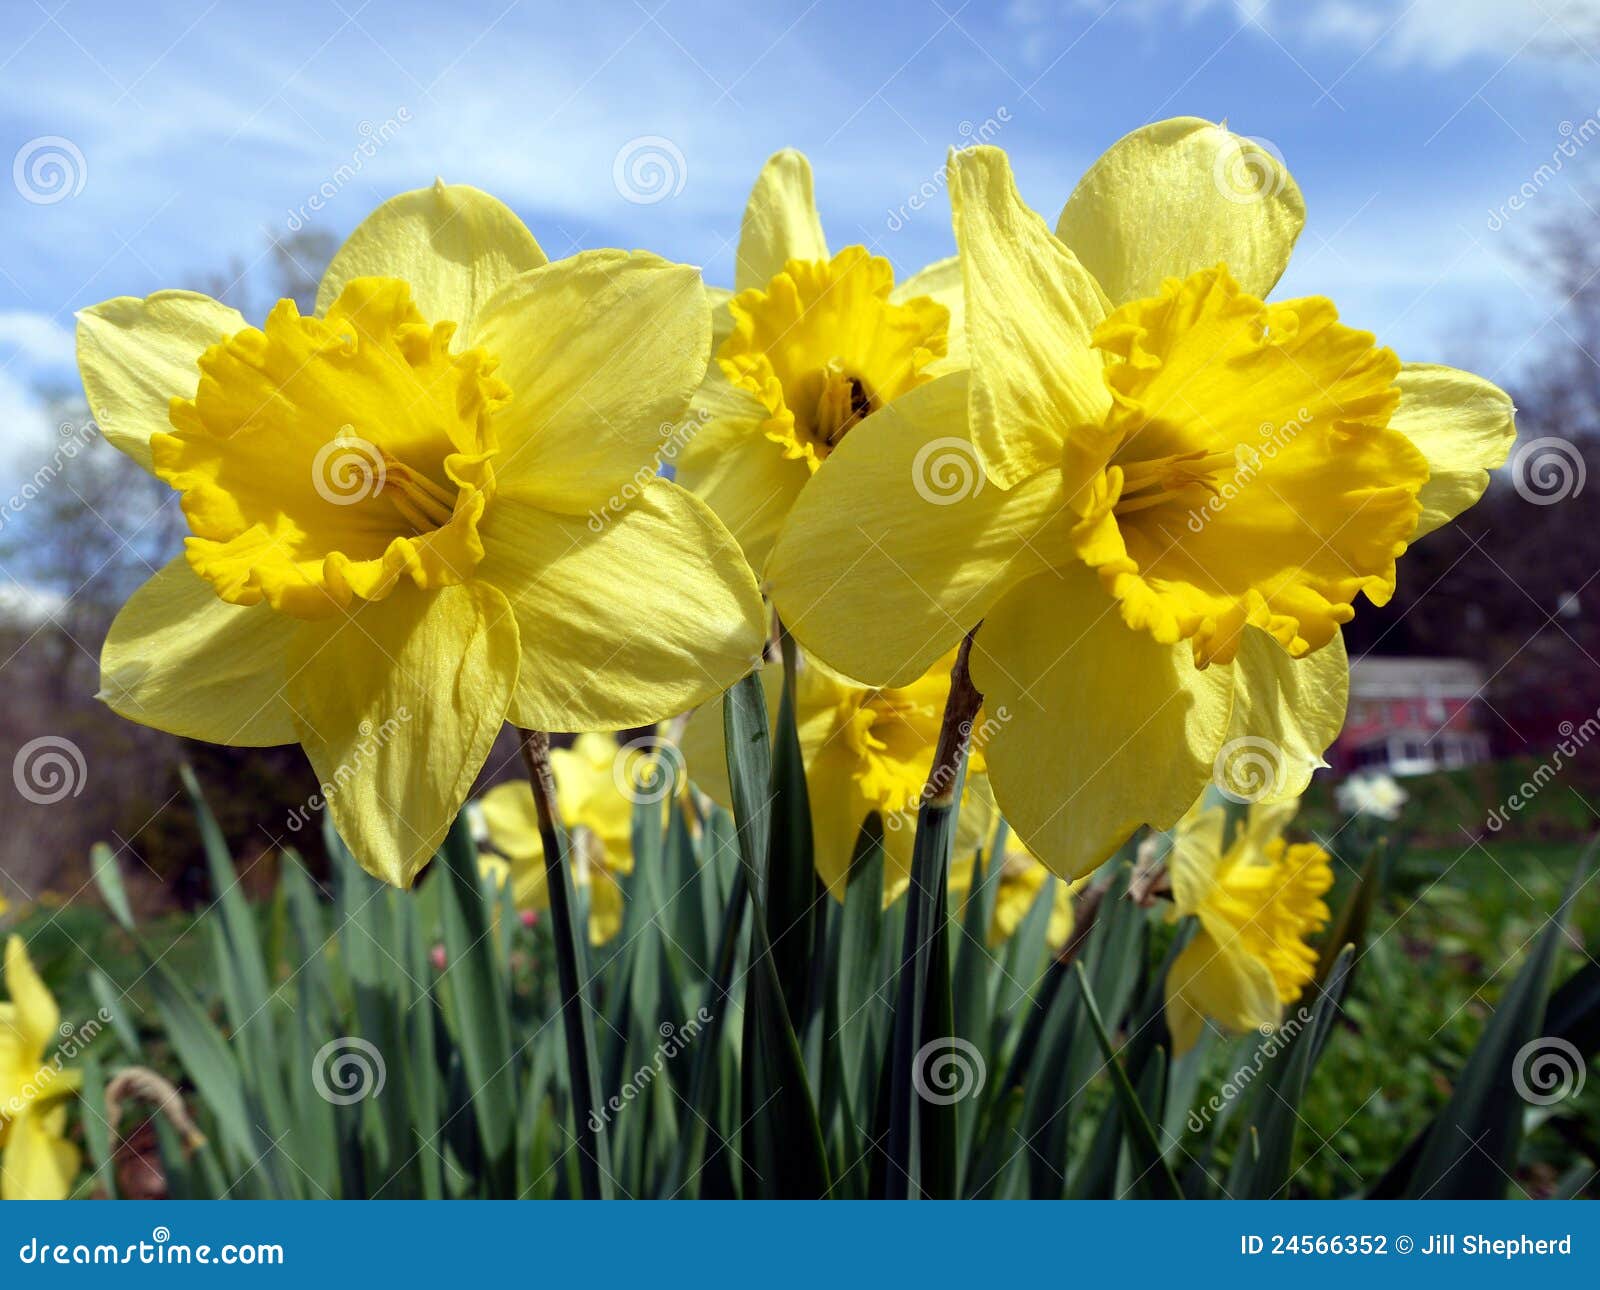 spring: sunlit yellow daffodils